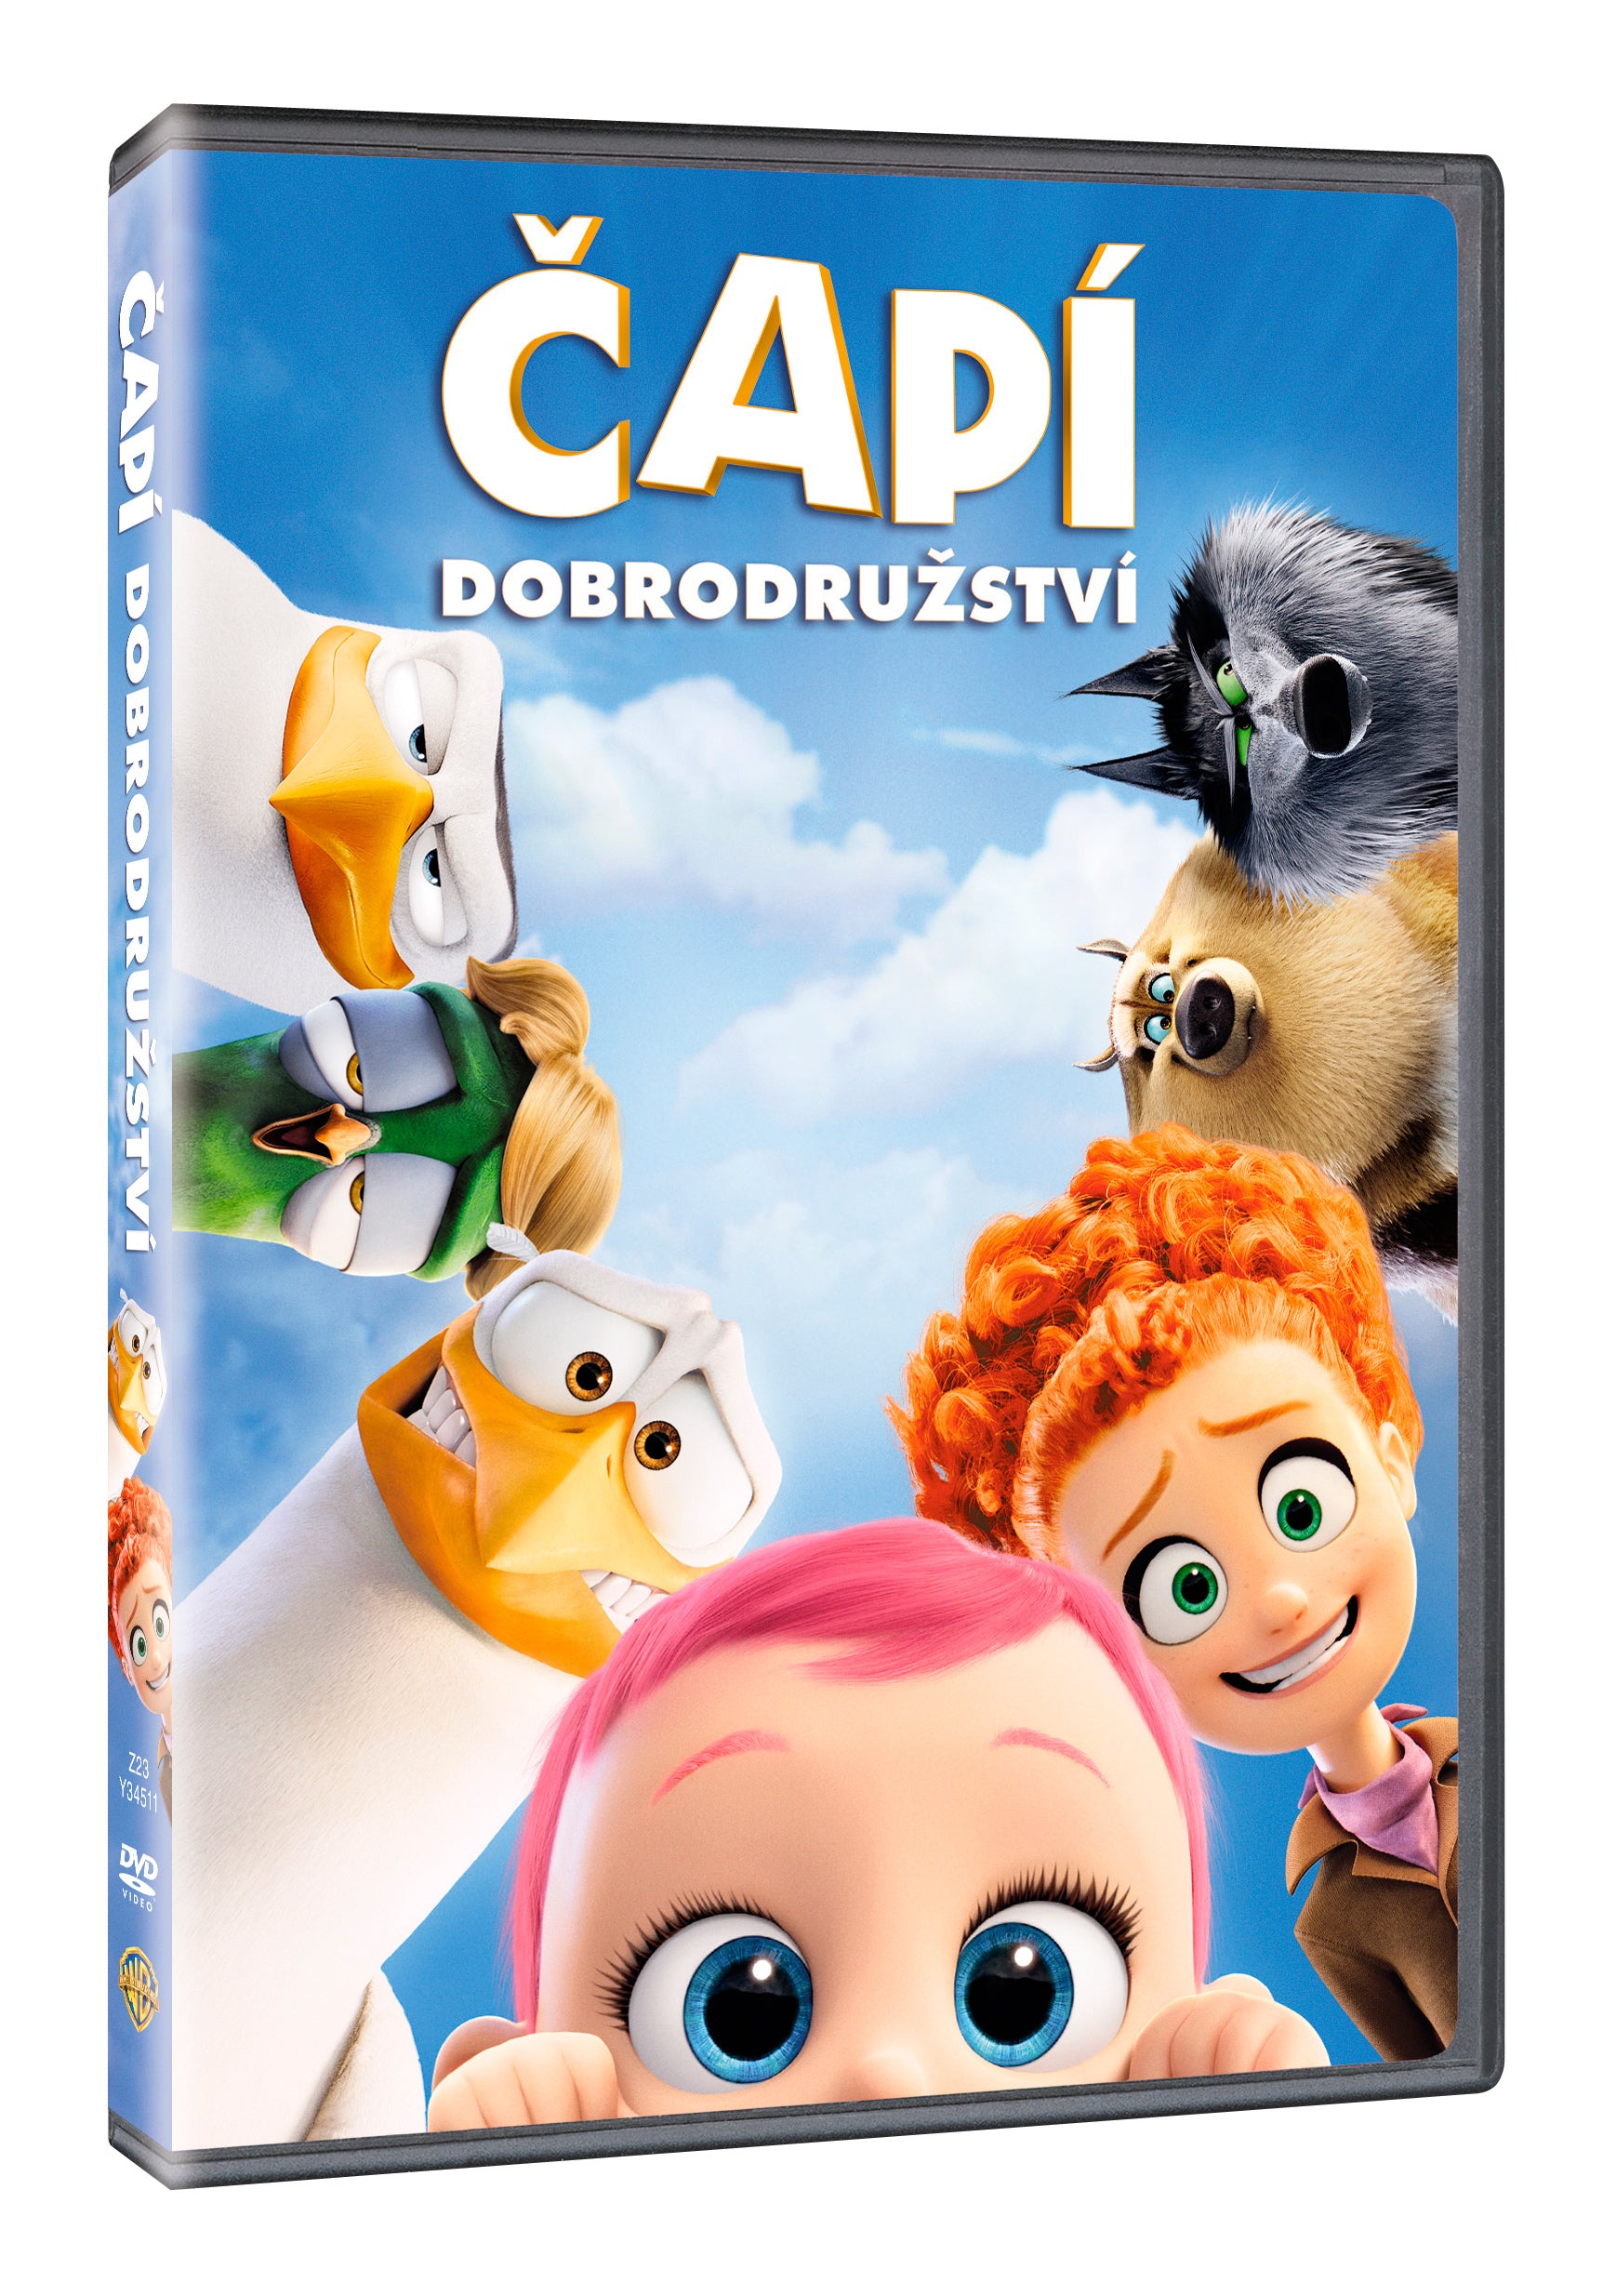 Capi dobrodruzstvi DVD / Storks